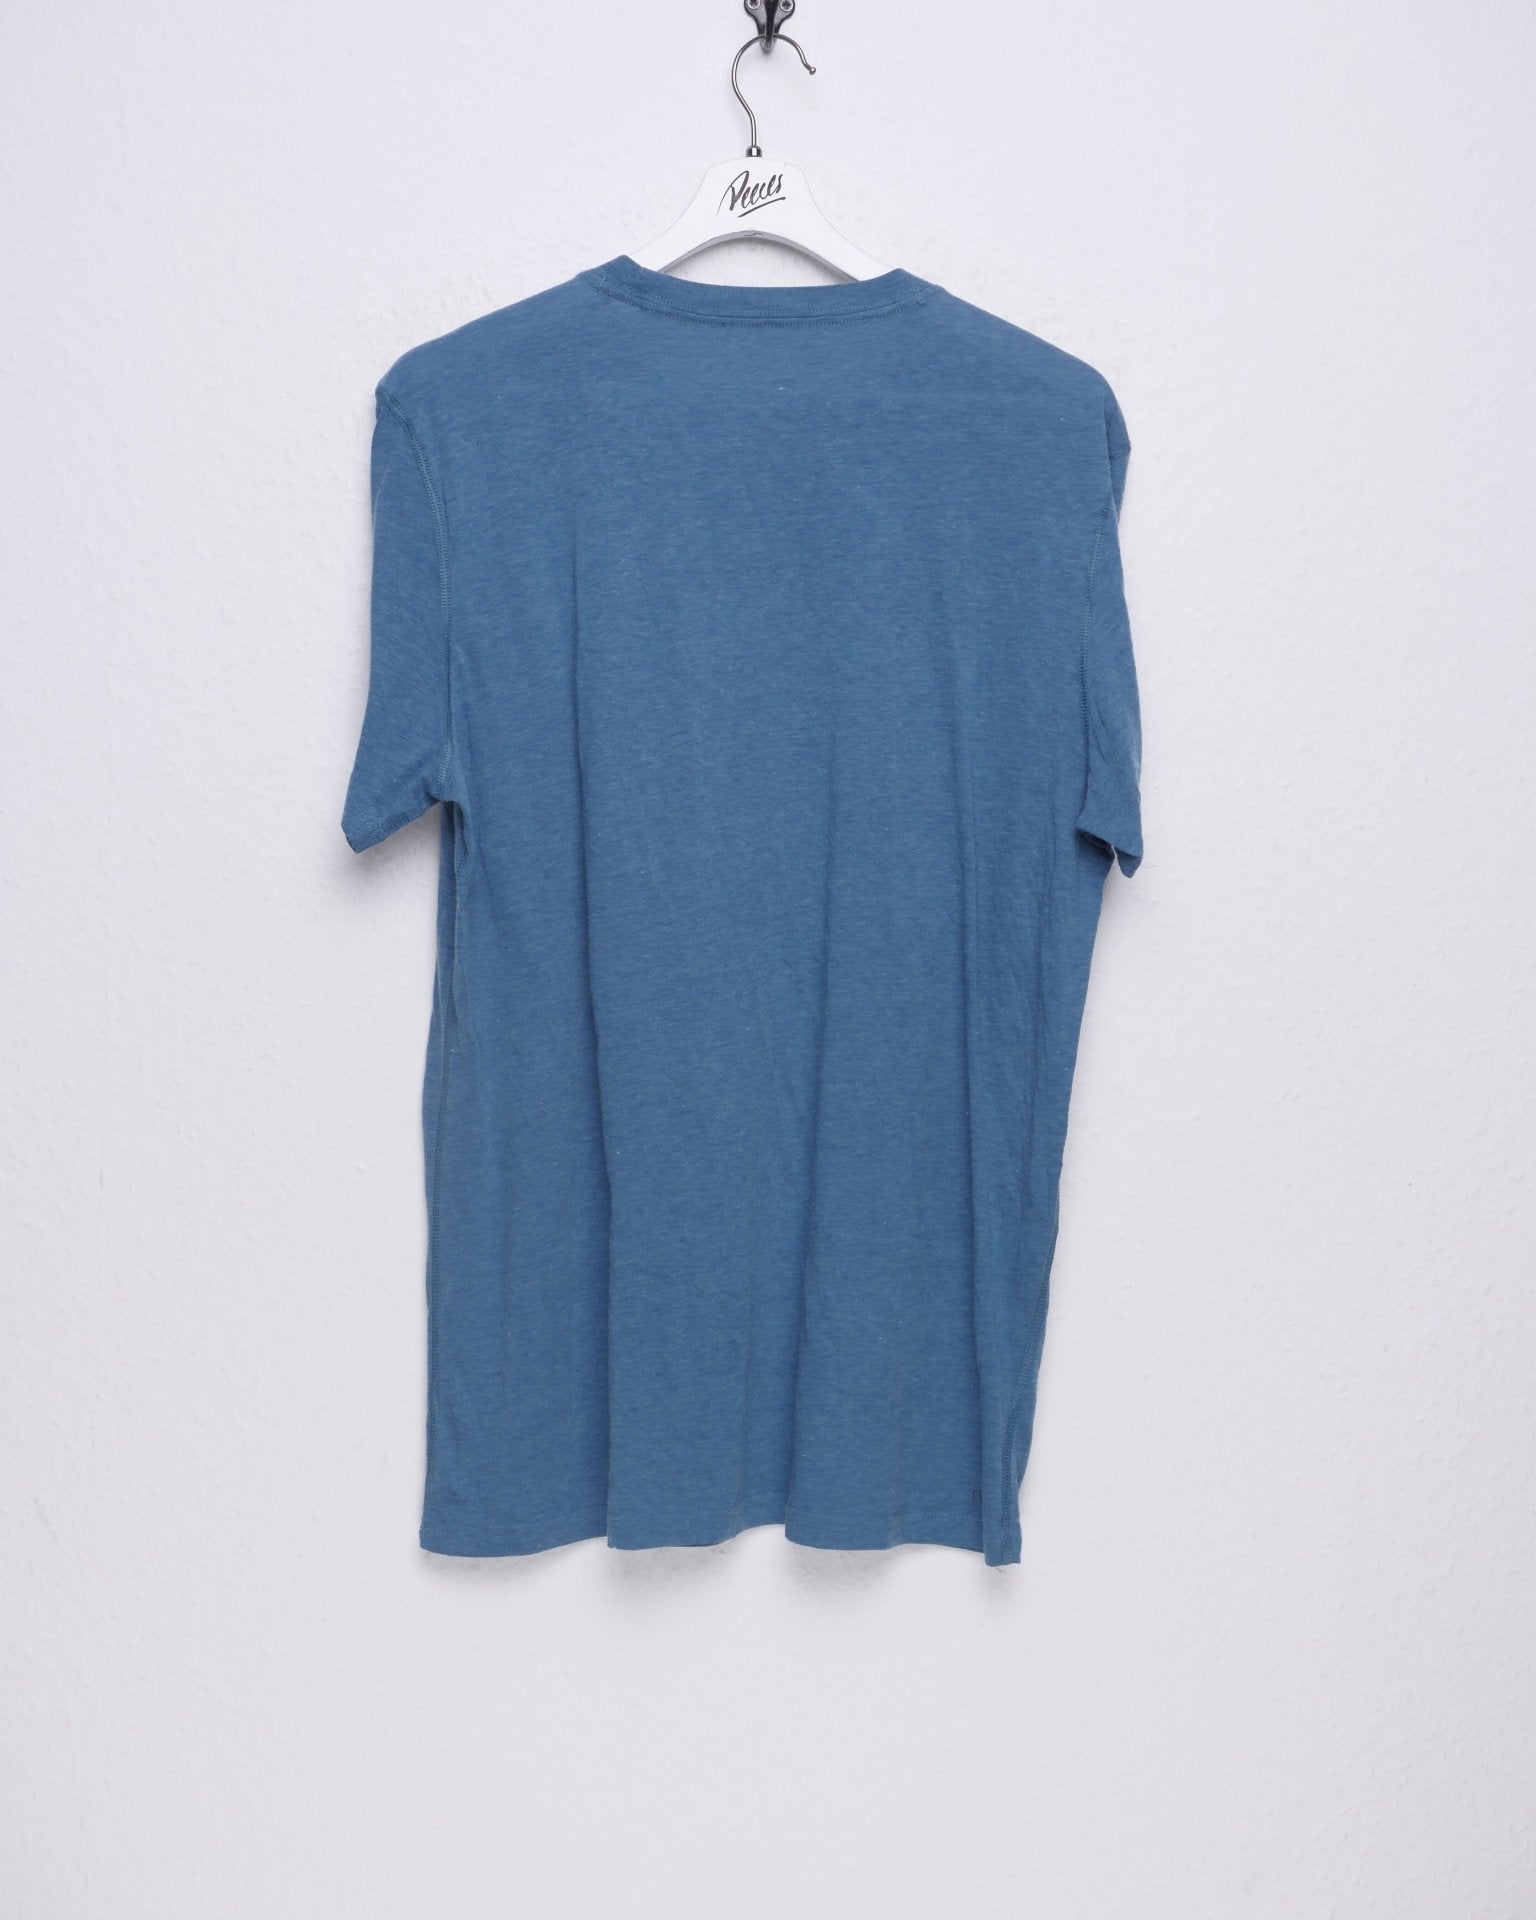 Adidas printed Logo basic blue Shirt - Peeces